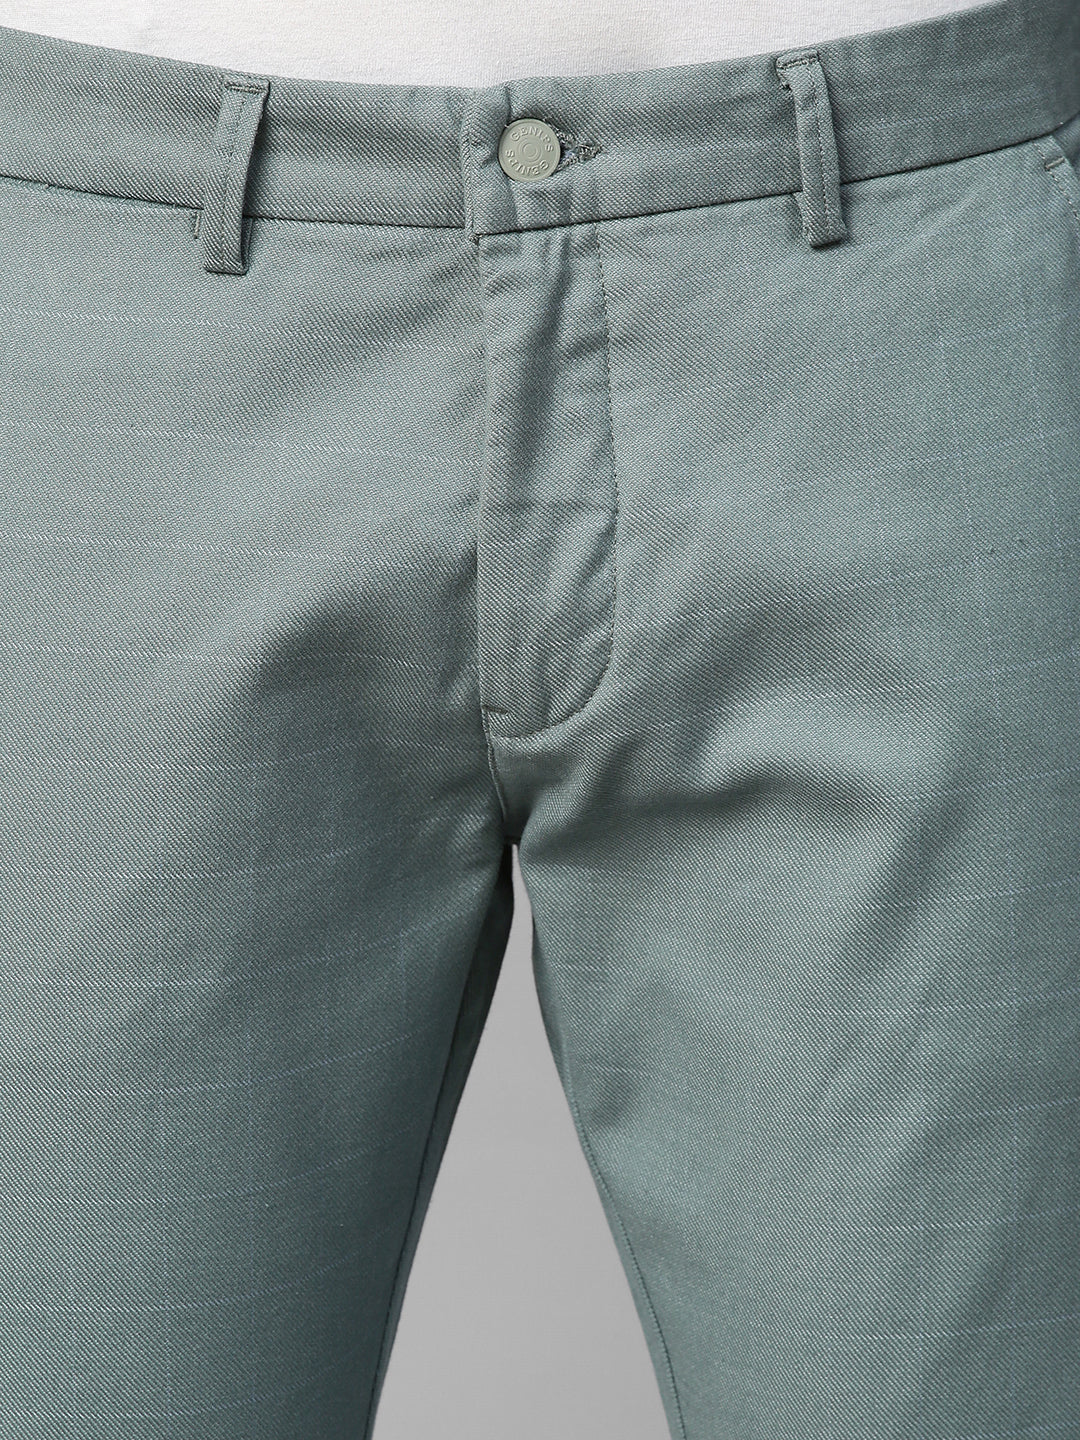 Genips Men's Sea Green Cotton Stretch Caribbean Slim Fit Self Design Trousers